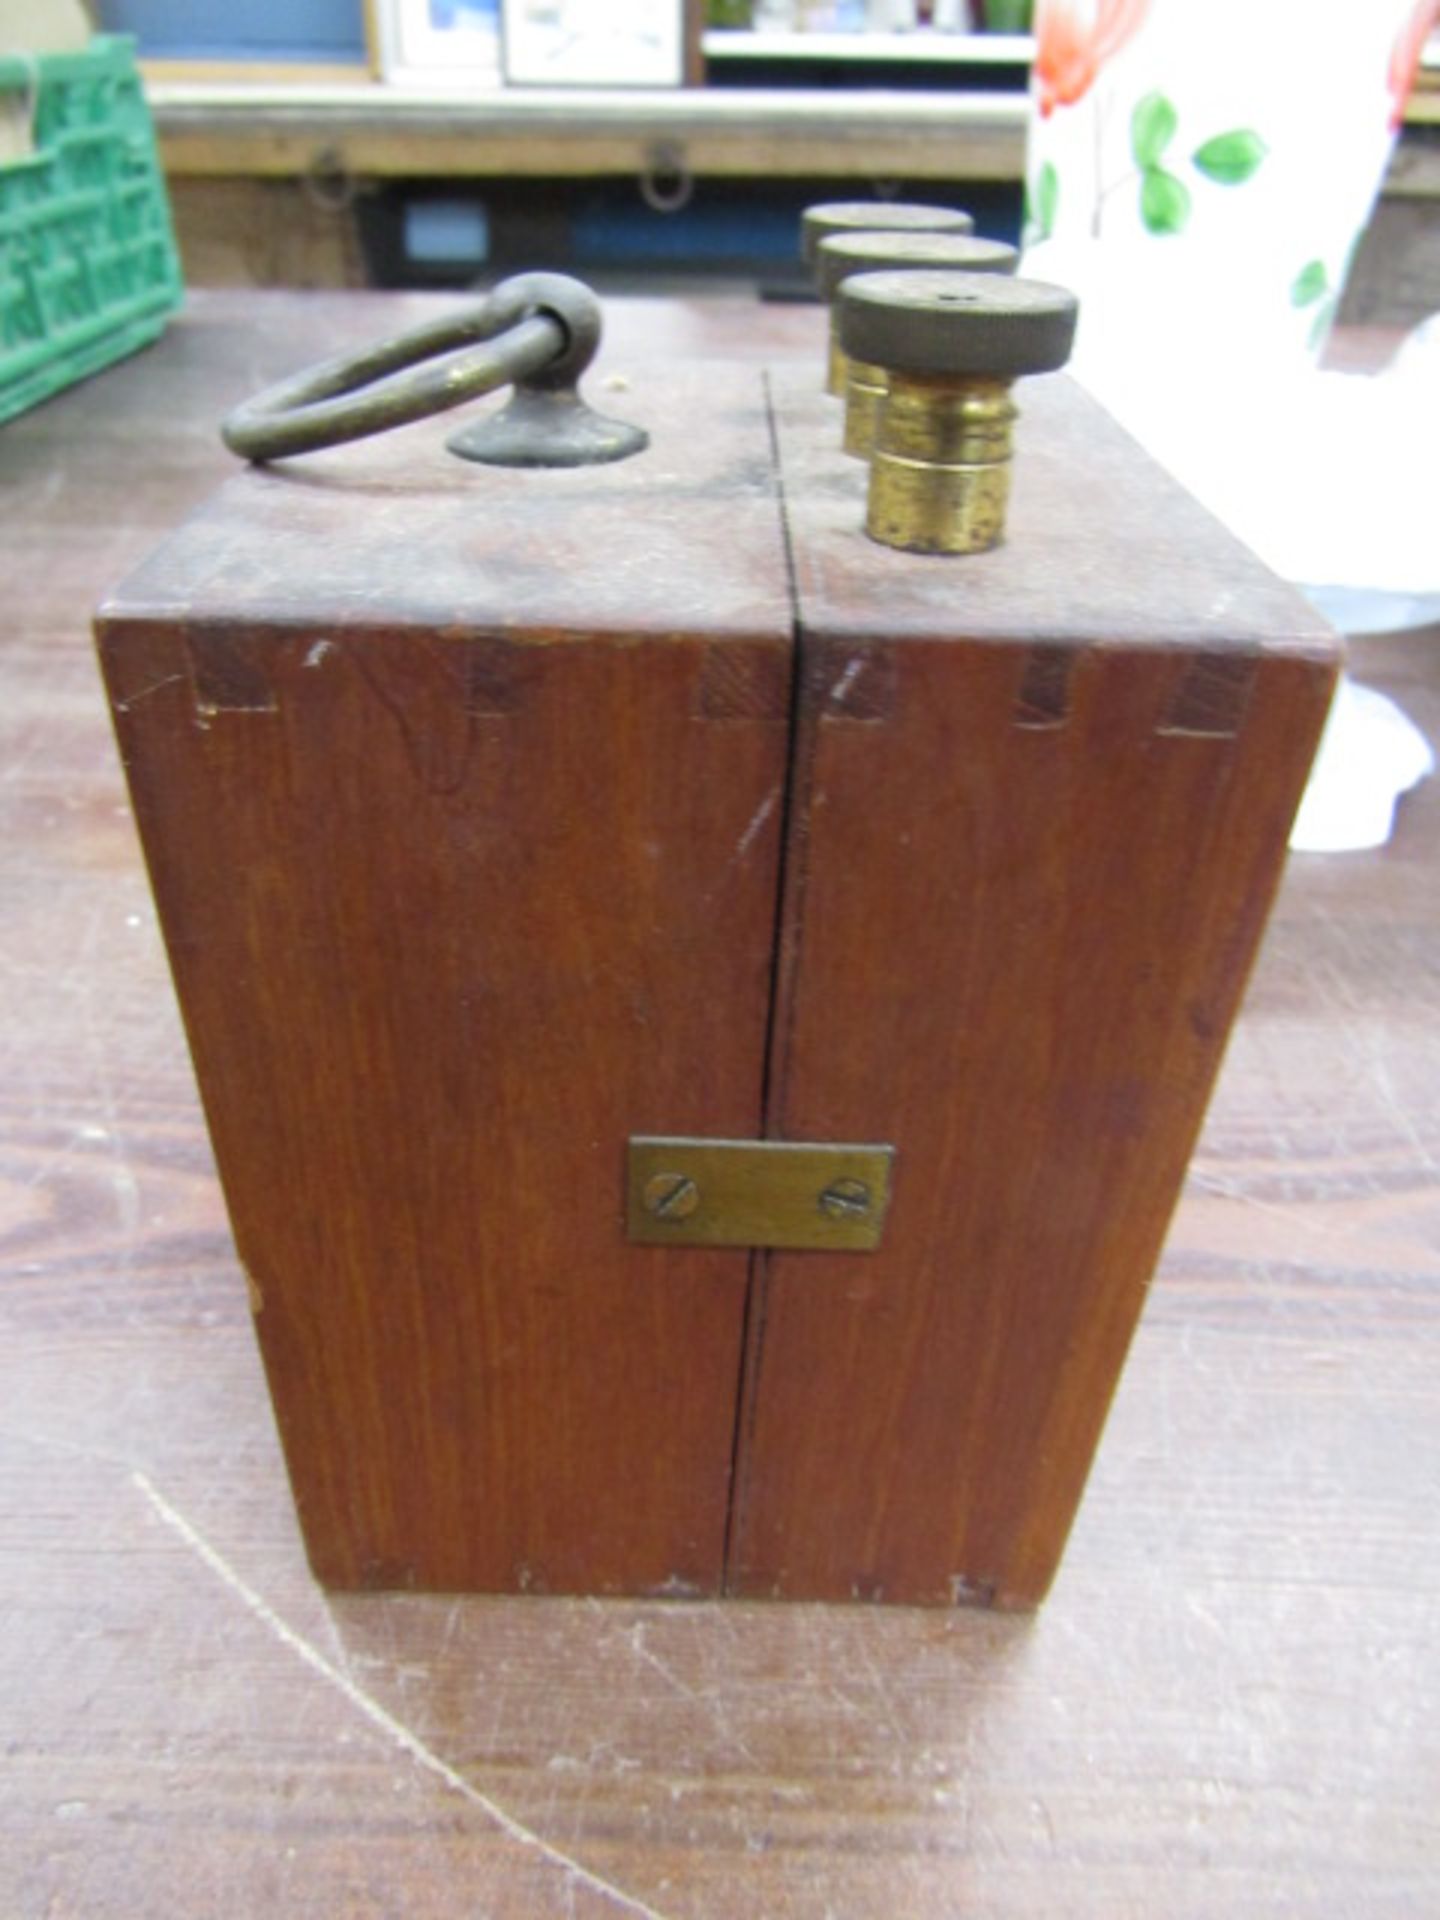 Telegraph works galvanometer - Image 4 of 4